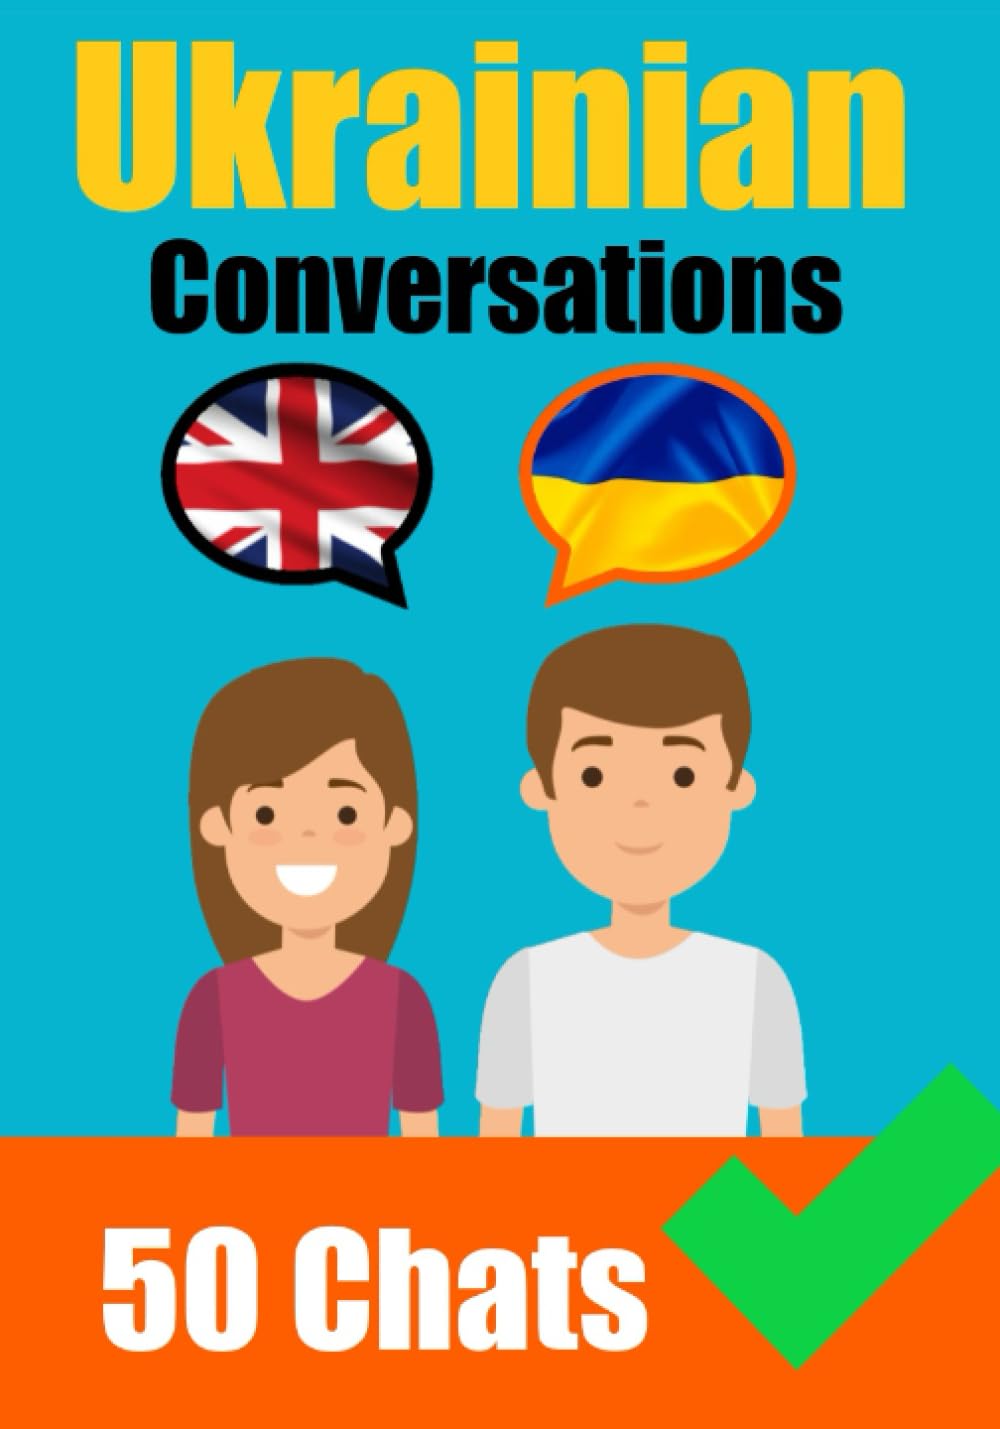 Conversations in Ukrainian | English and Ukrainian Conversation Side by Side - Skriuwer.com